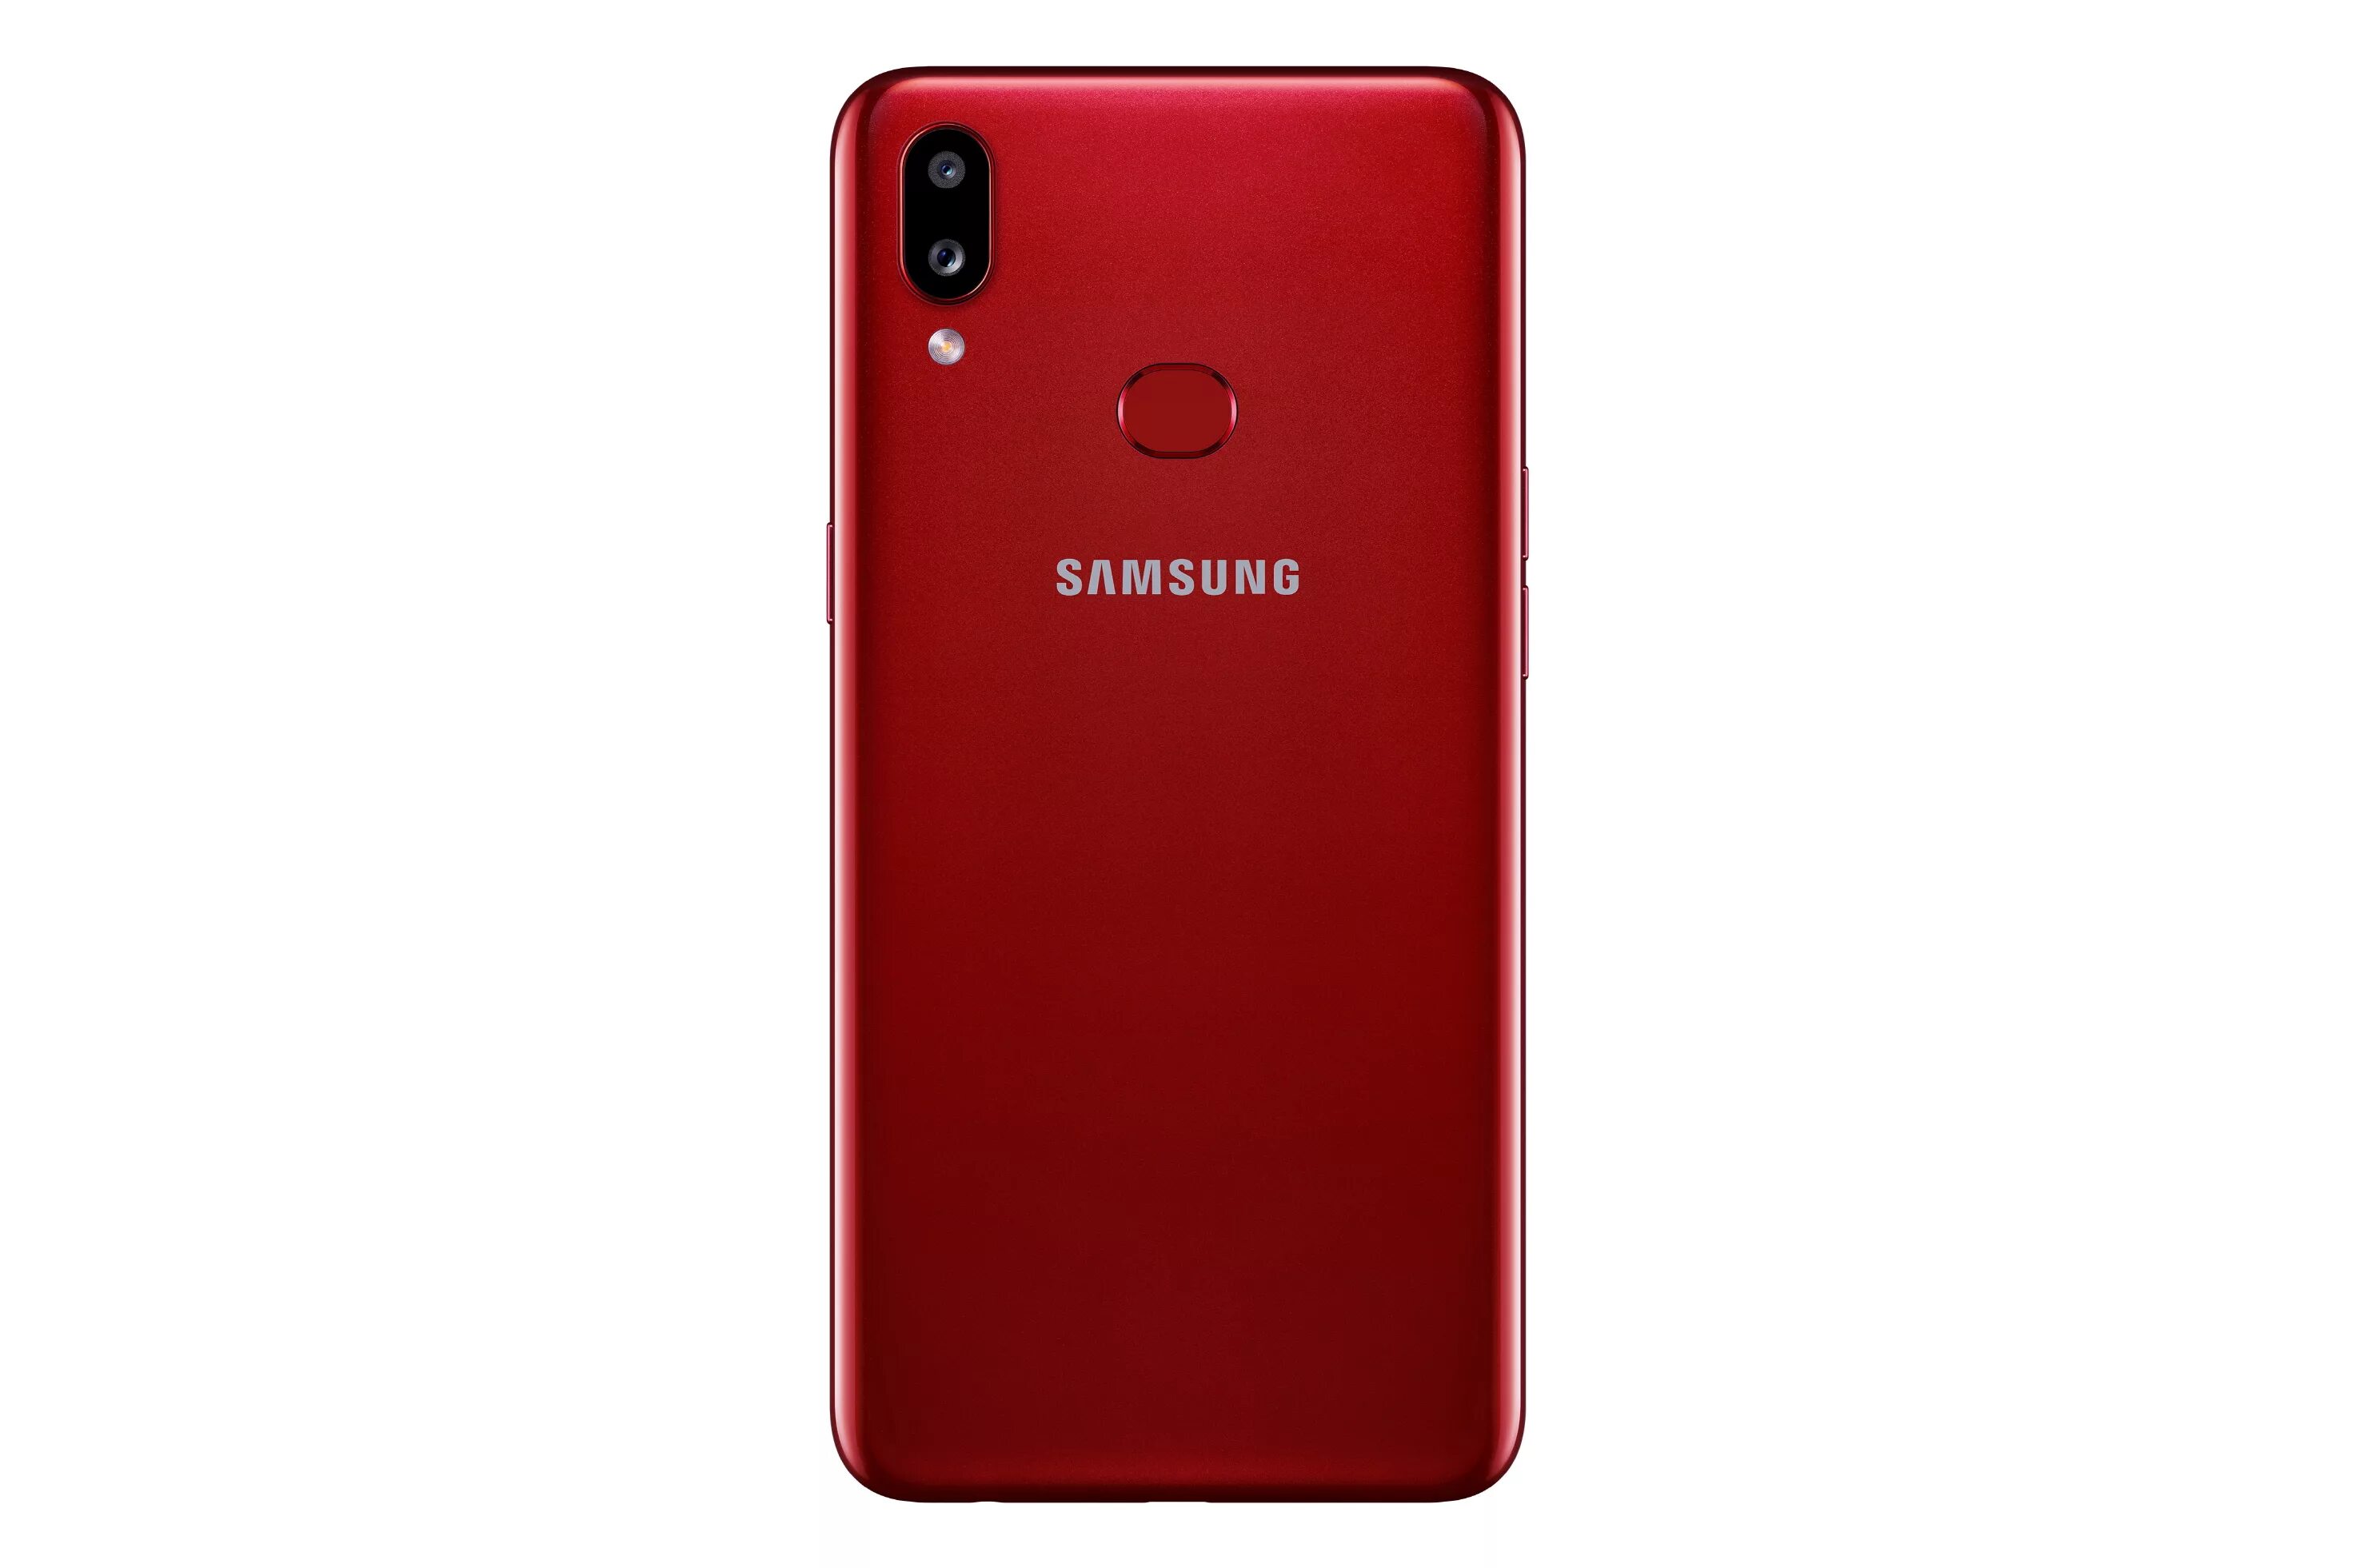 Самсунг галакси а 10. Samsung Galaxy a10 s 2/32. Samsung Galaxy s10. Samsung Galaxy s10 Red. Смартфон Samsung Galaxy a10s 2+32 GB Red.